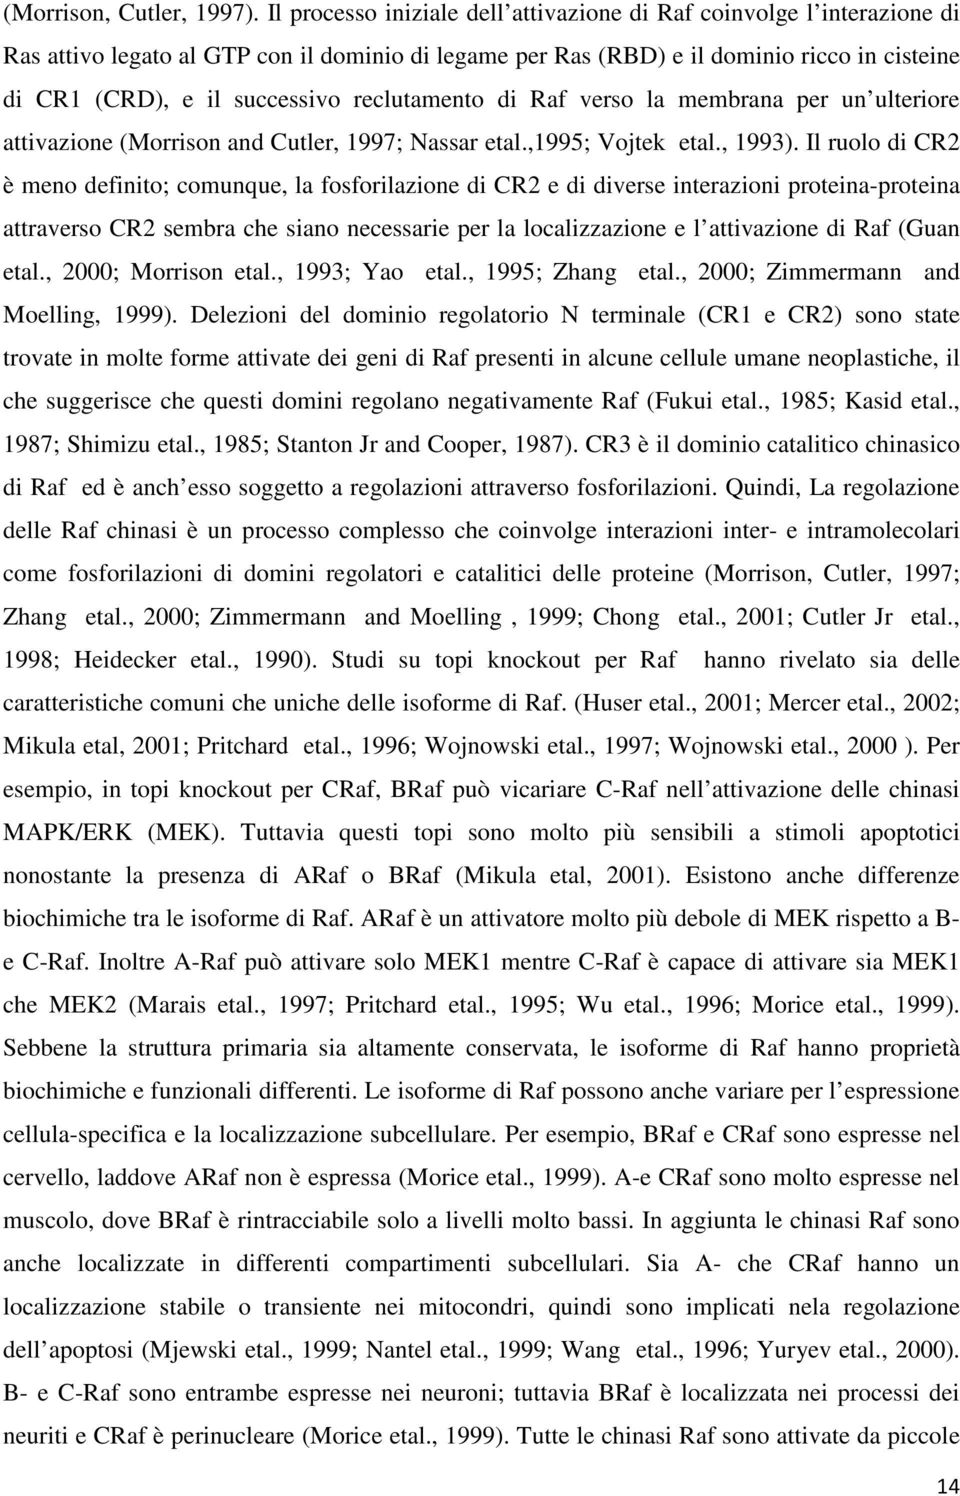 reclutamento di Raf verso la membrana per un ulteriore attivazione (Morrison and Cutler, 1997; Nassar etal.,1995; Vojtek etal., 1993).